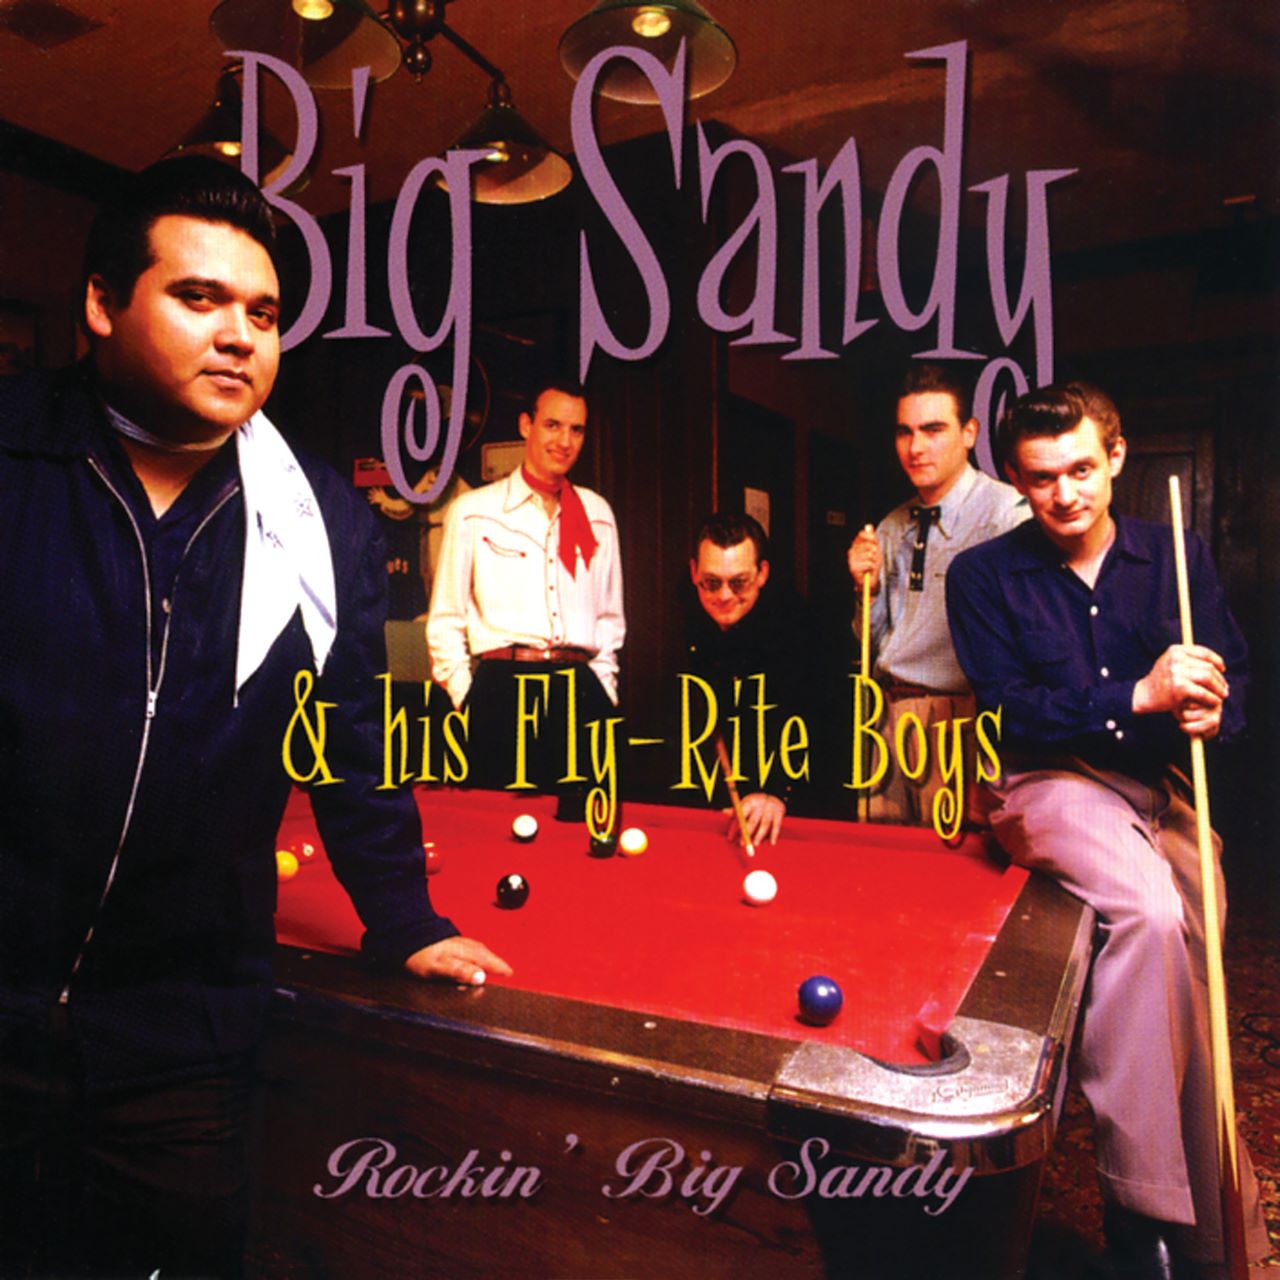 Big Sandy - Rockin' Big Sandy cover album